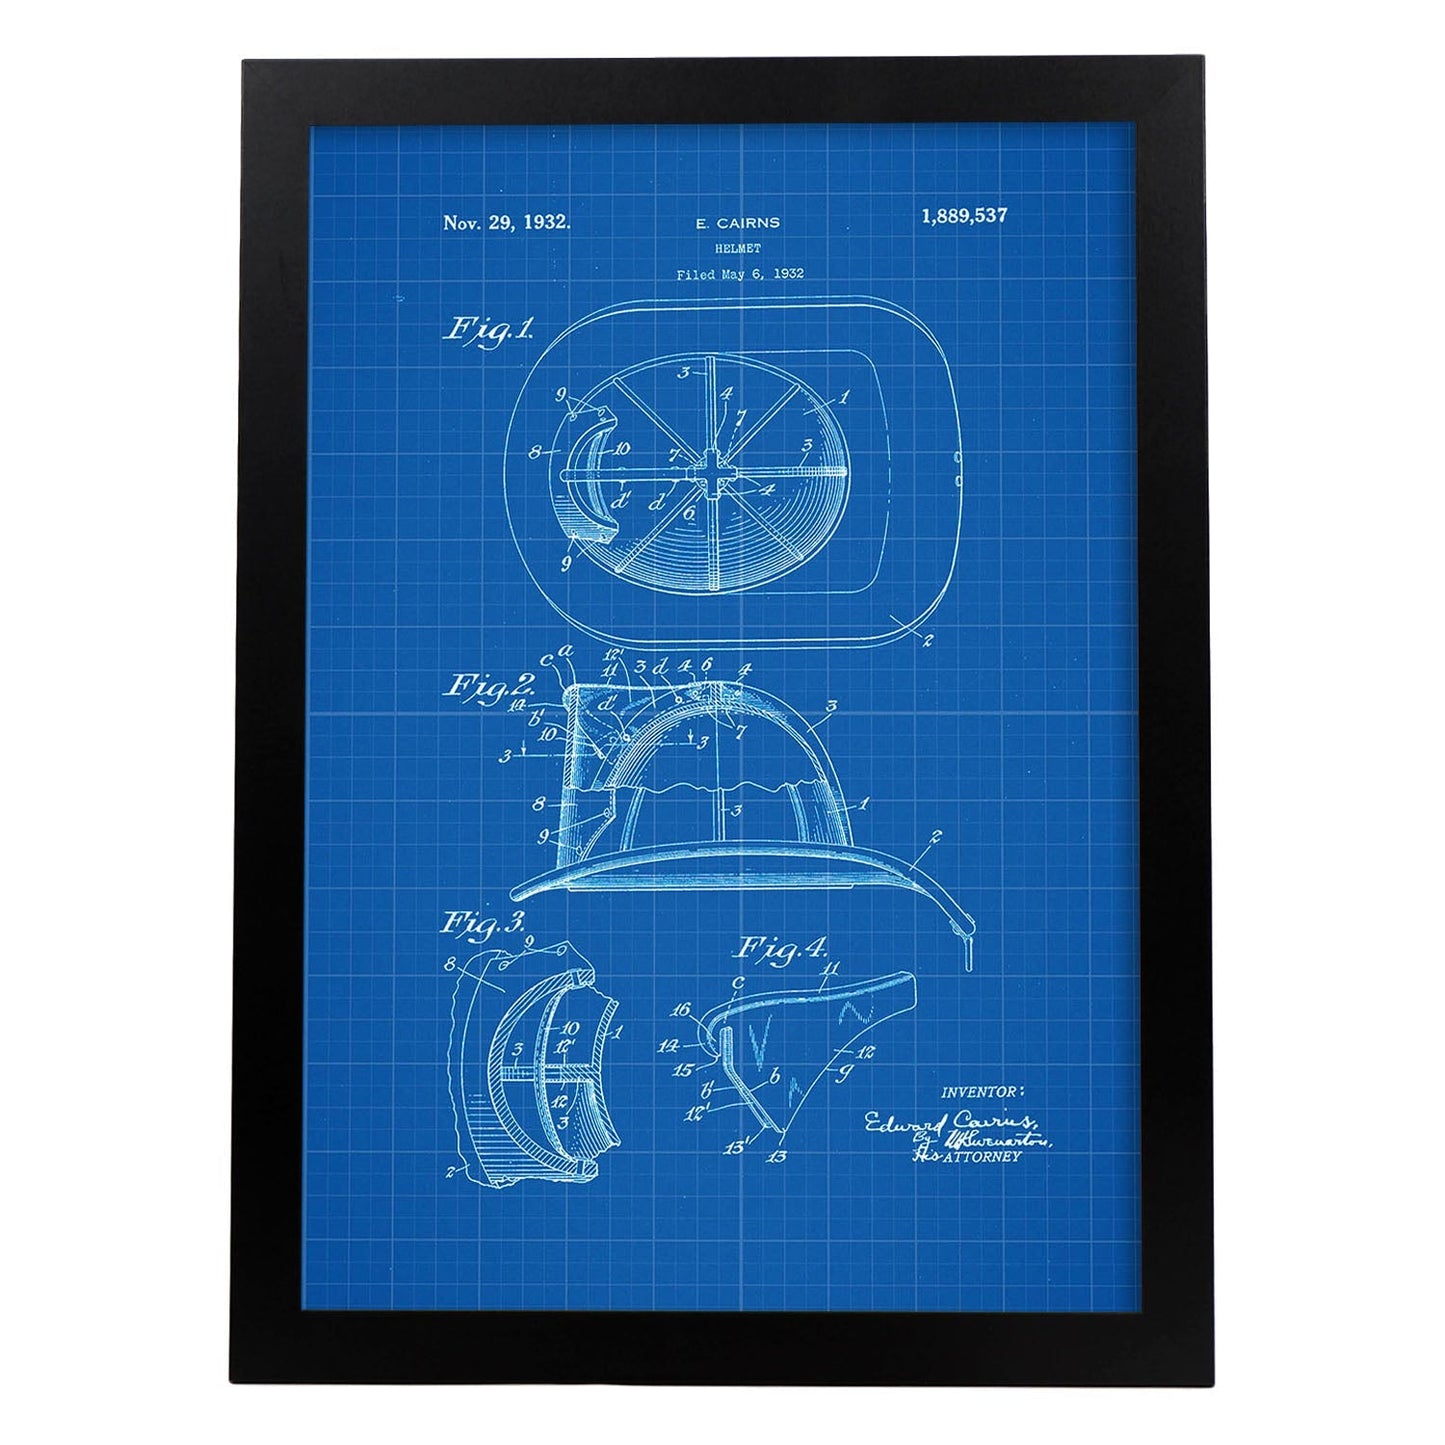 Poster con patente de Casco de bombero 2. Lámina con diseño de patente antigua-Artwork-Nacnic-A3-Marco Negro-Nacnic Estudio SL